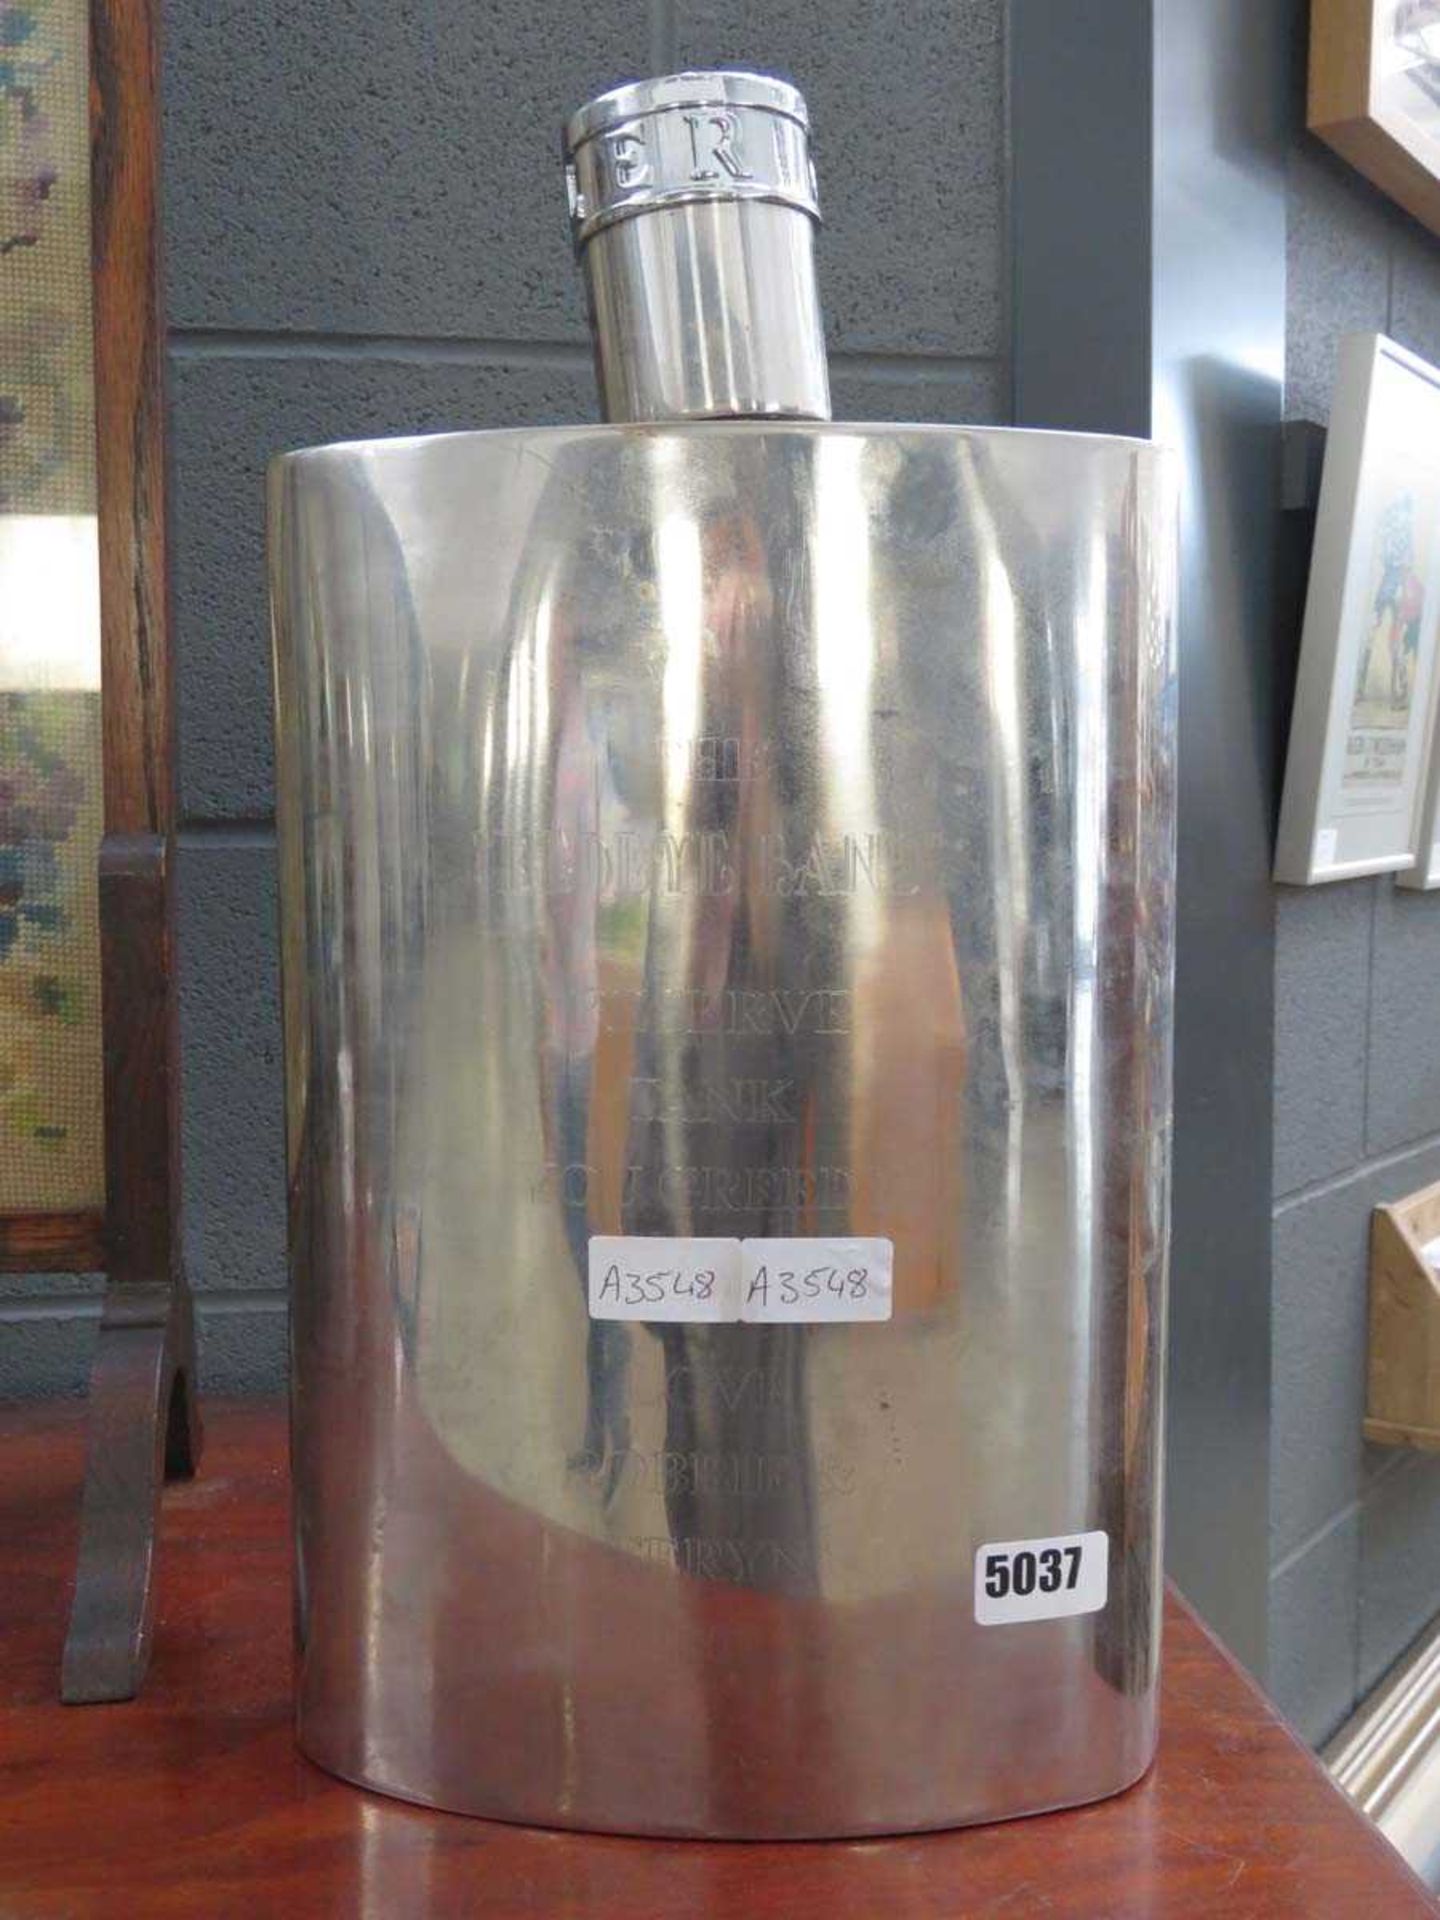 Oversized hip flask